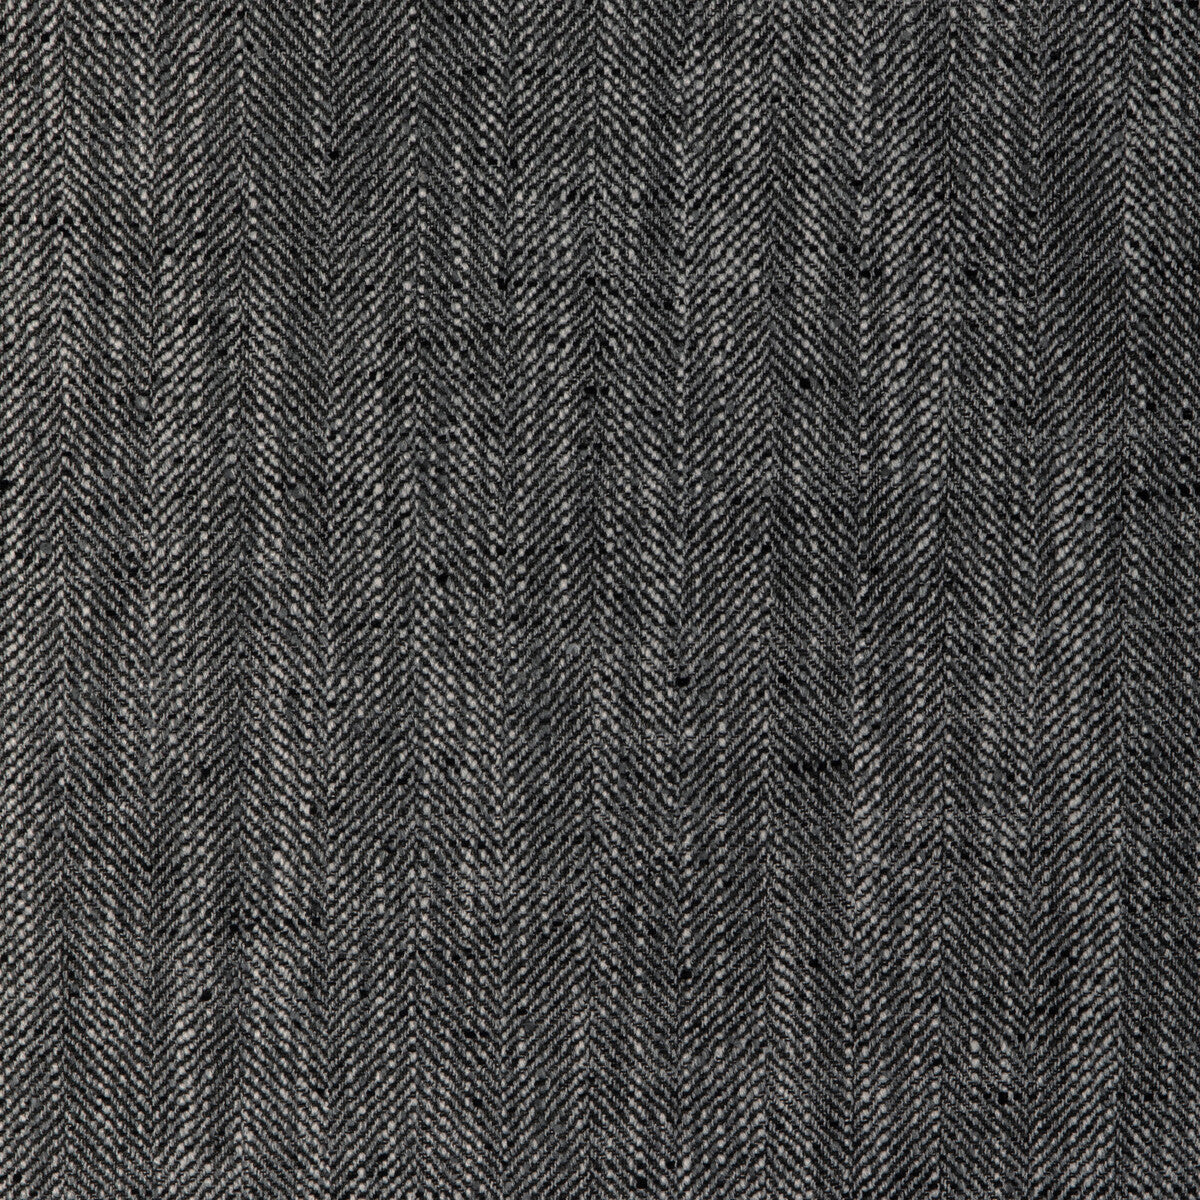 Kravet Smart fabric in 36674-811 color - pattern 36674.811.0 - by Kravet Smart in the Performance Kravetarmor collection